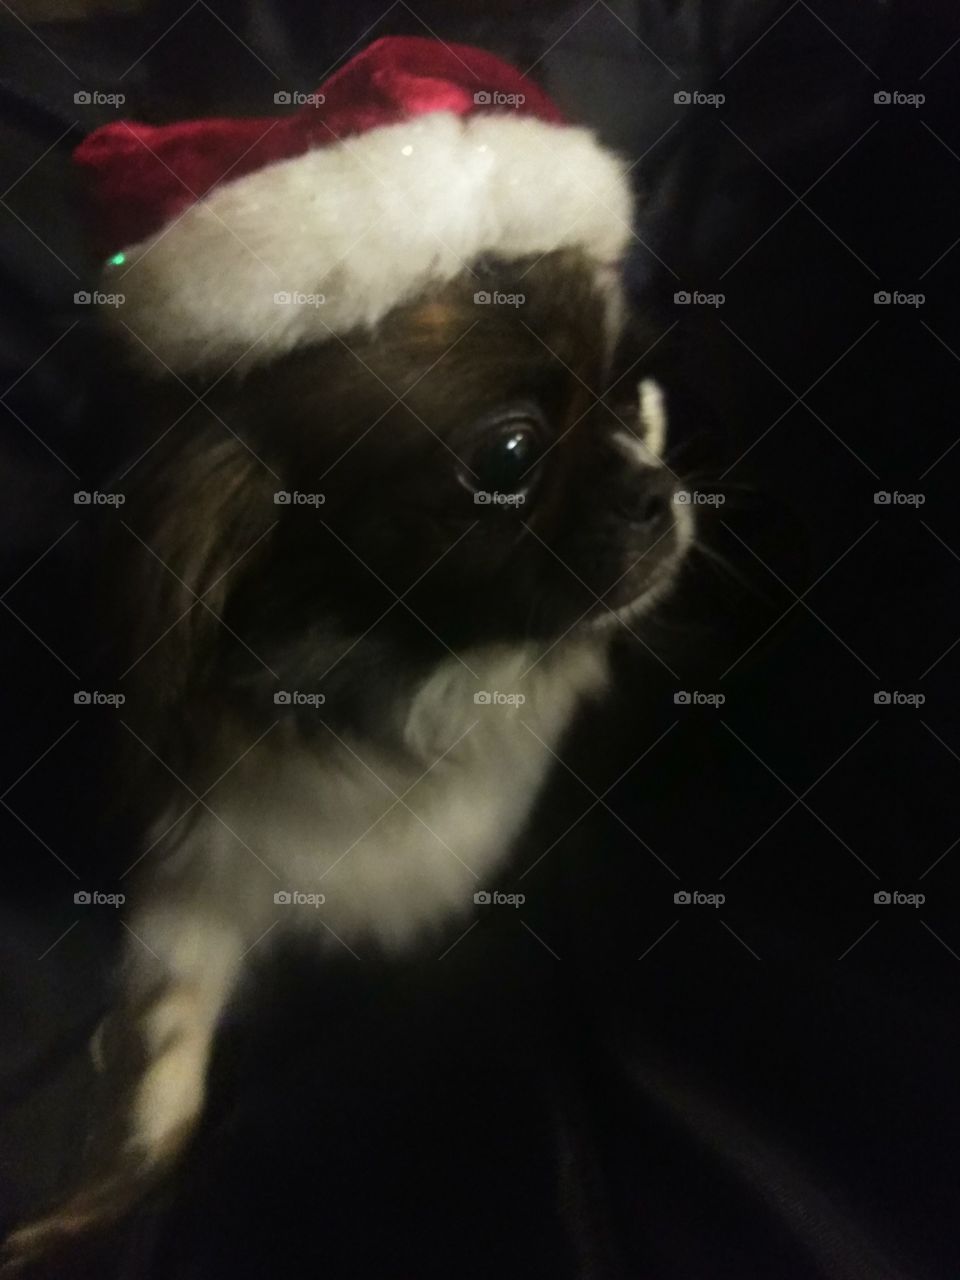 Roxy says Merry Christmas